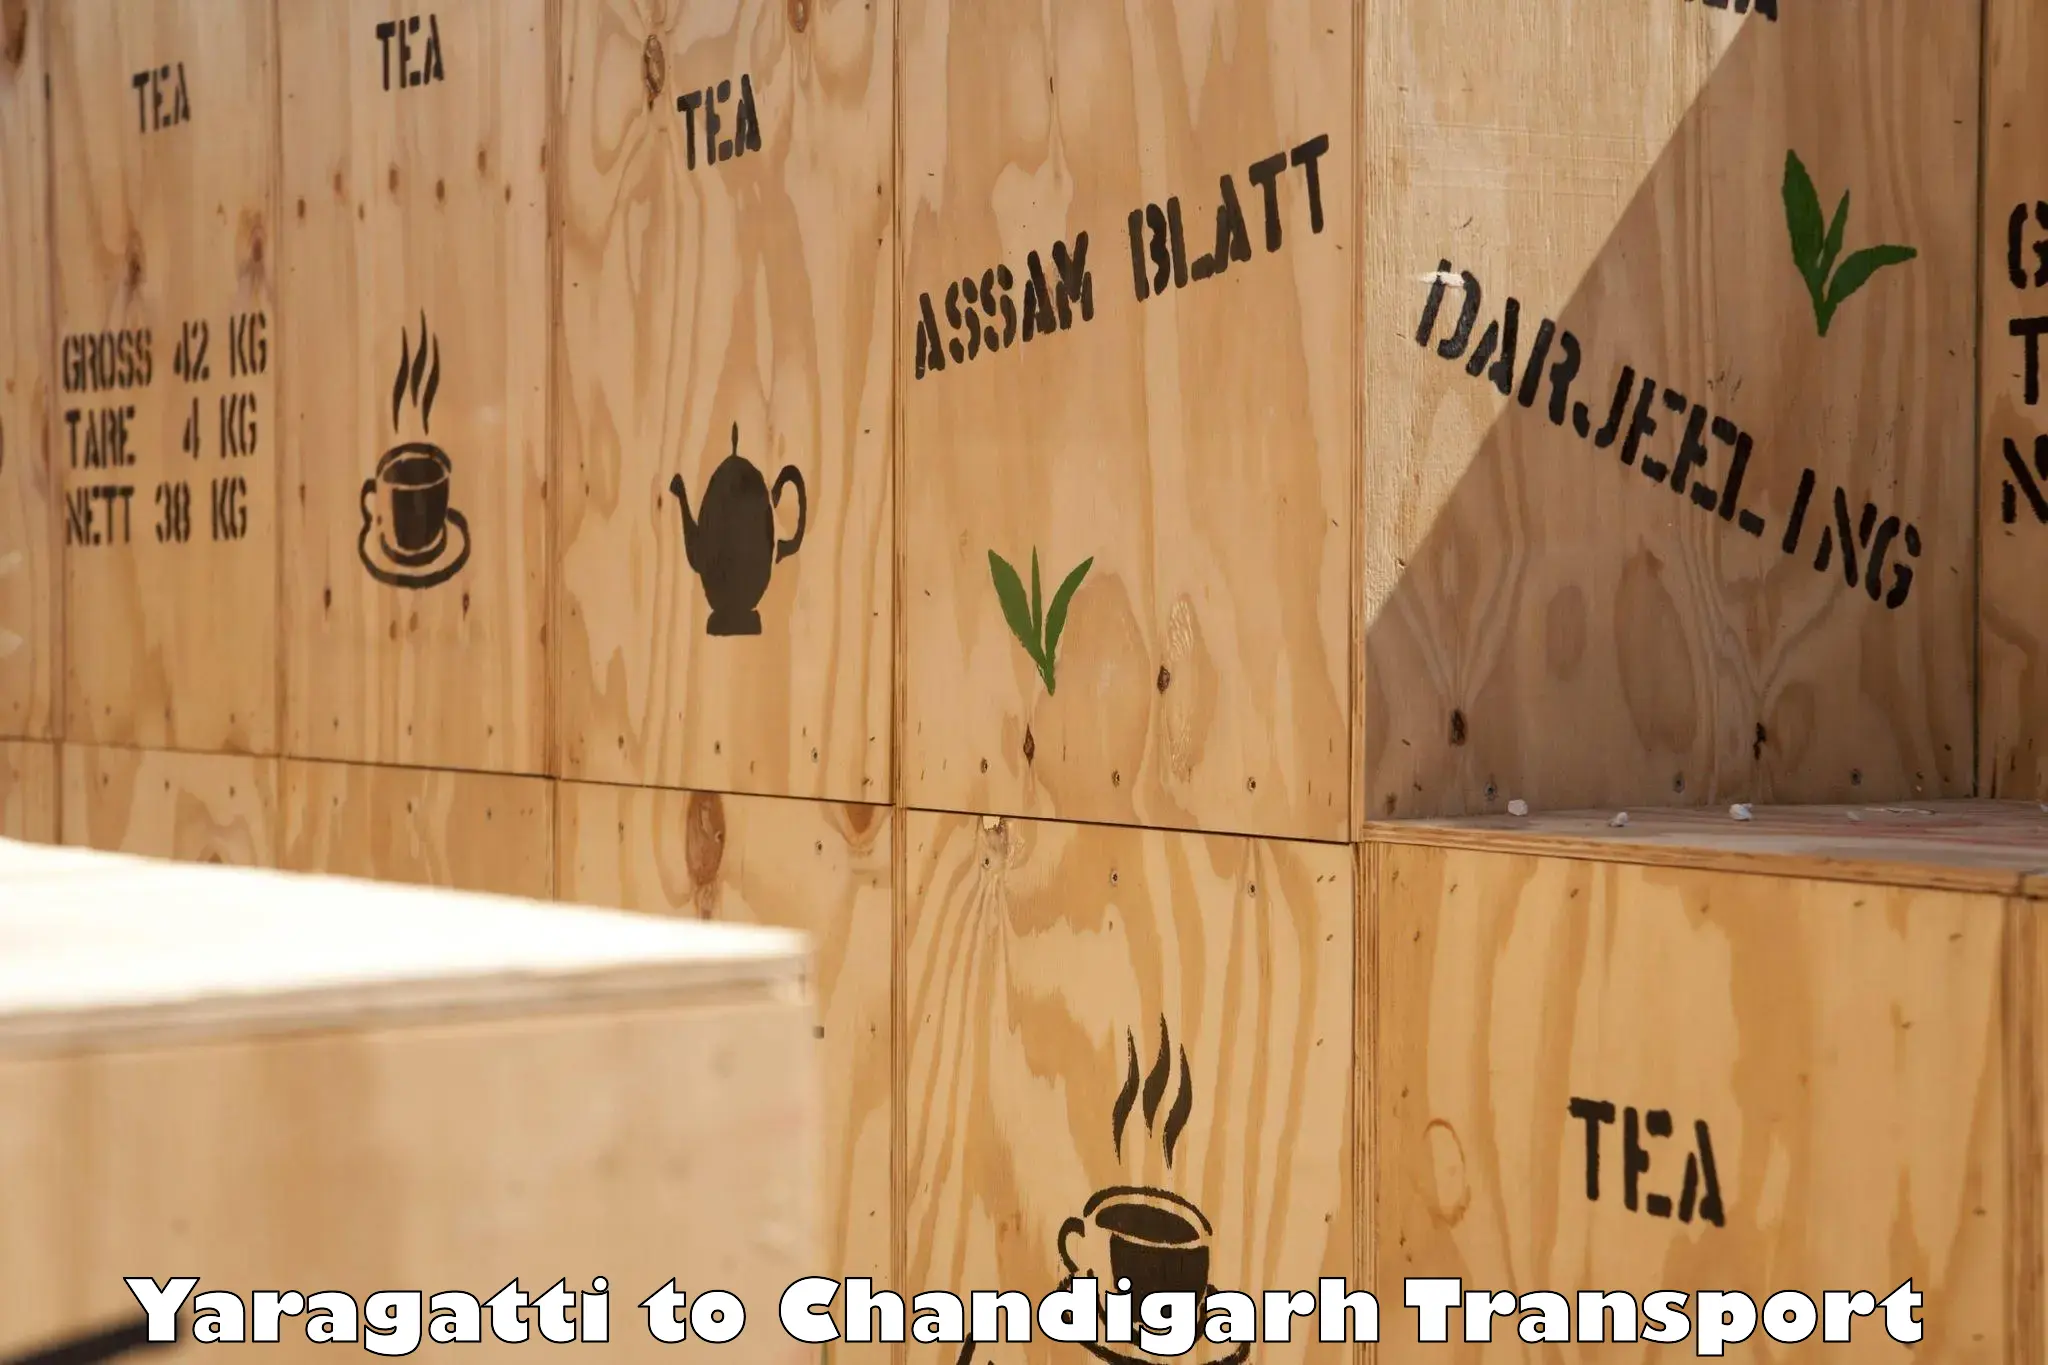 Vehicle transport services Yaragatti to Chandigarh